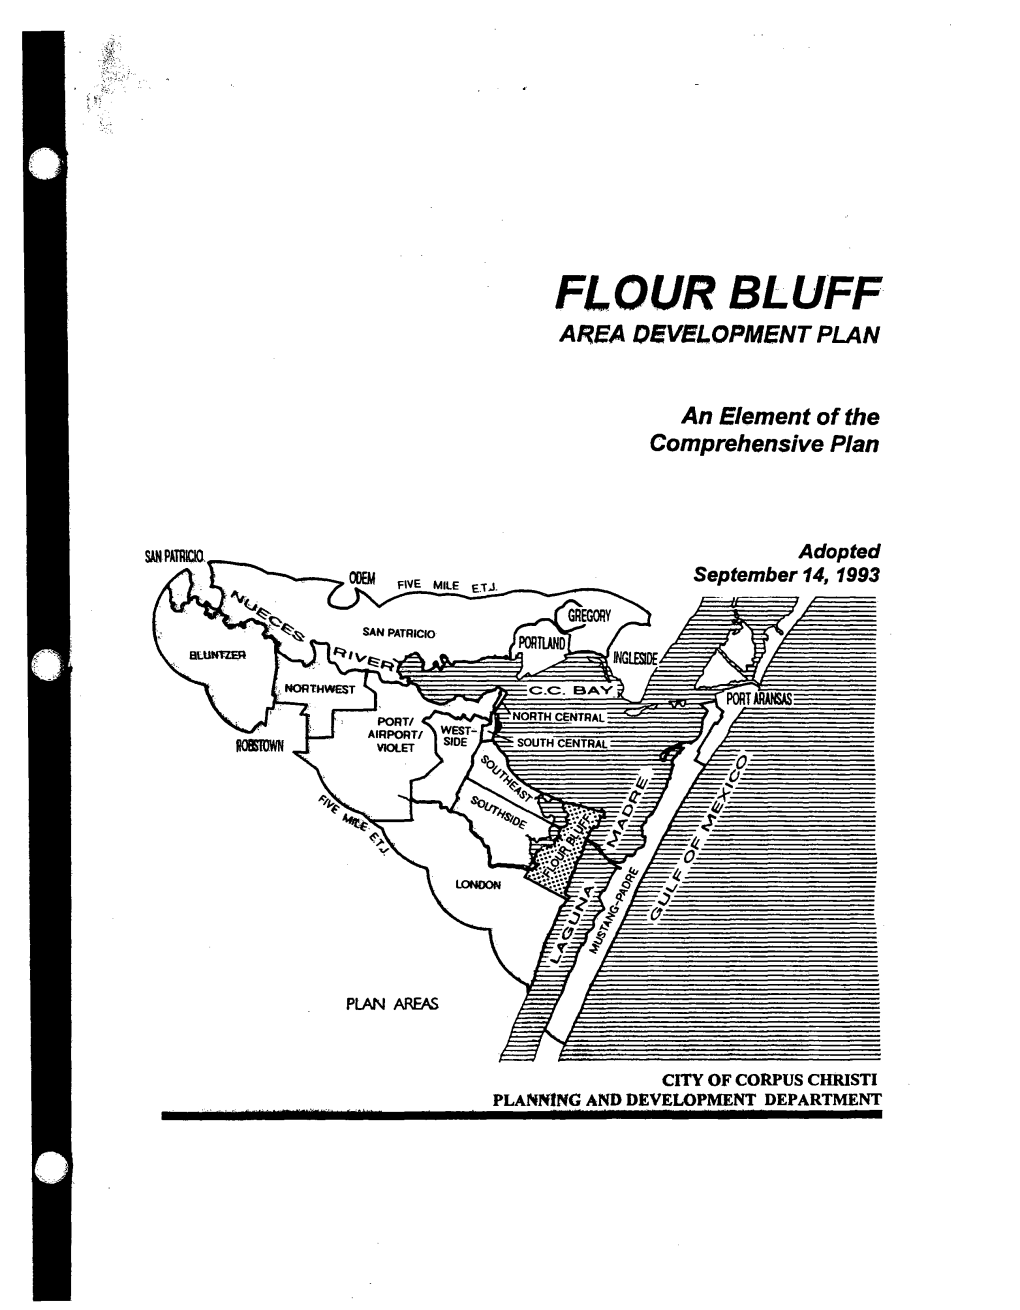 1993 Flour Bluff Area Development Plan